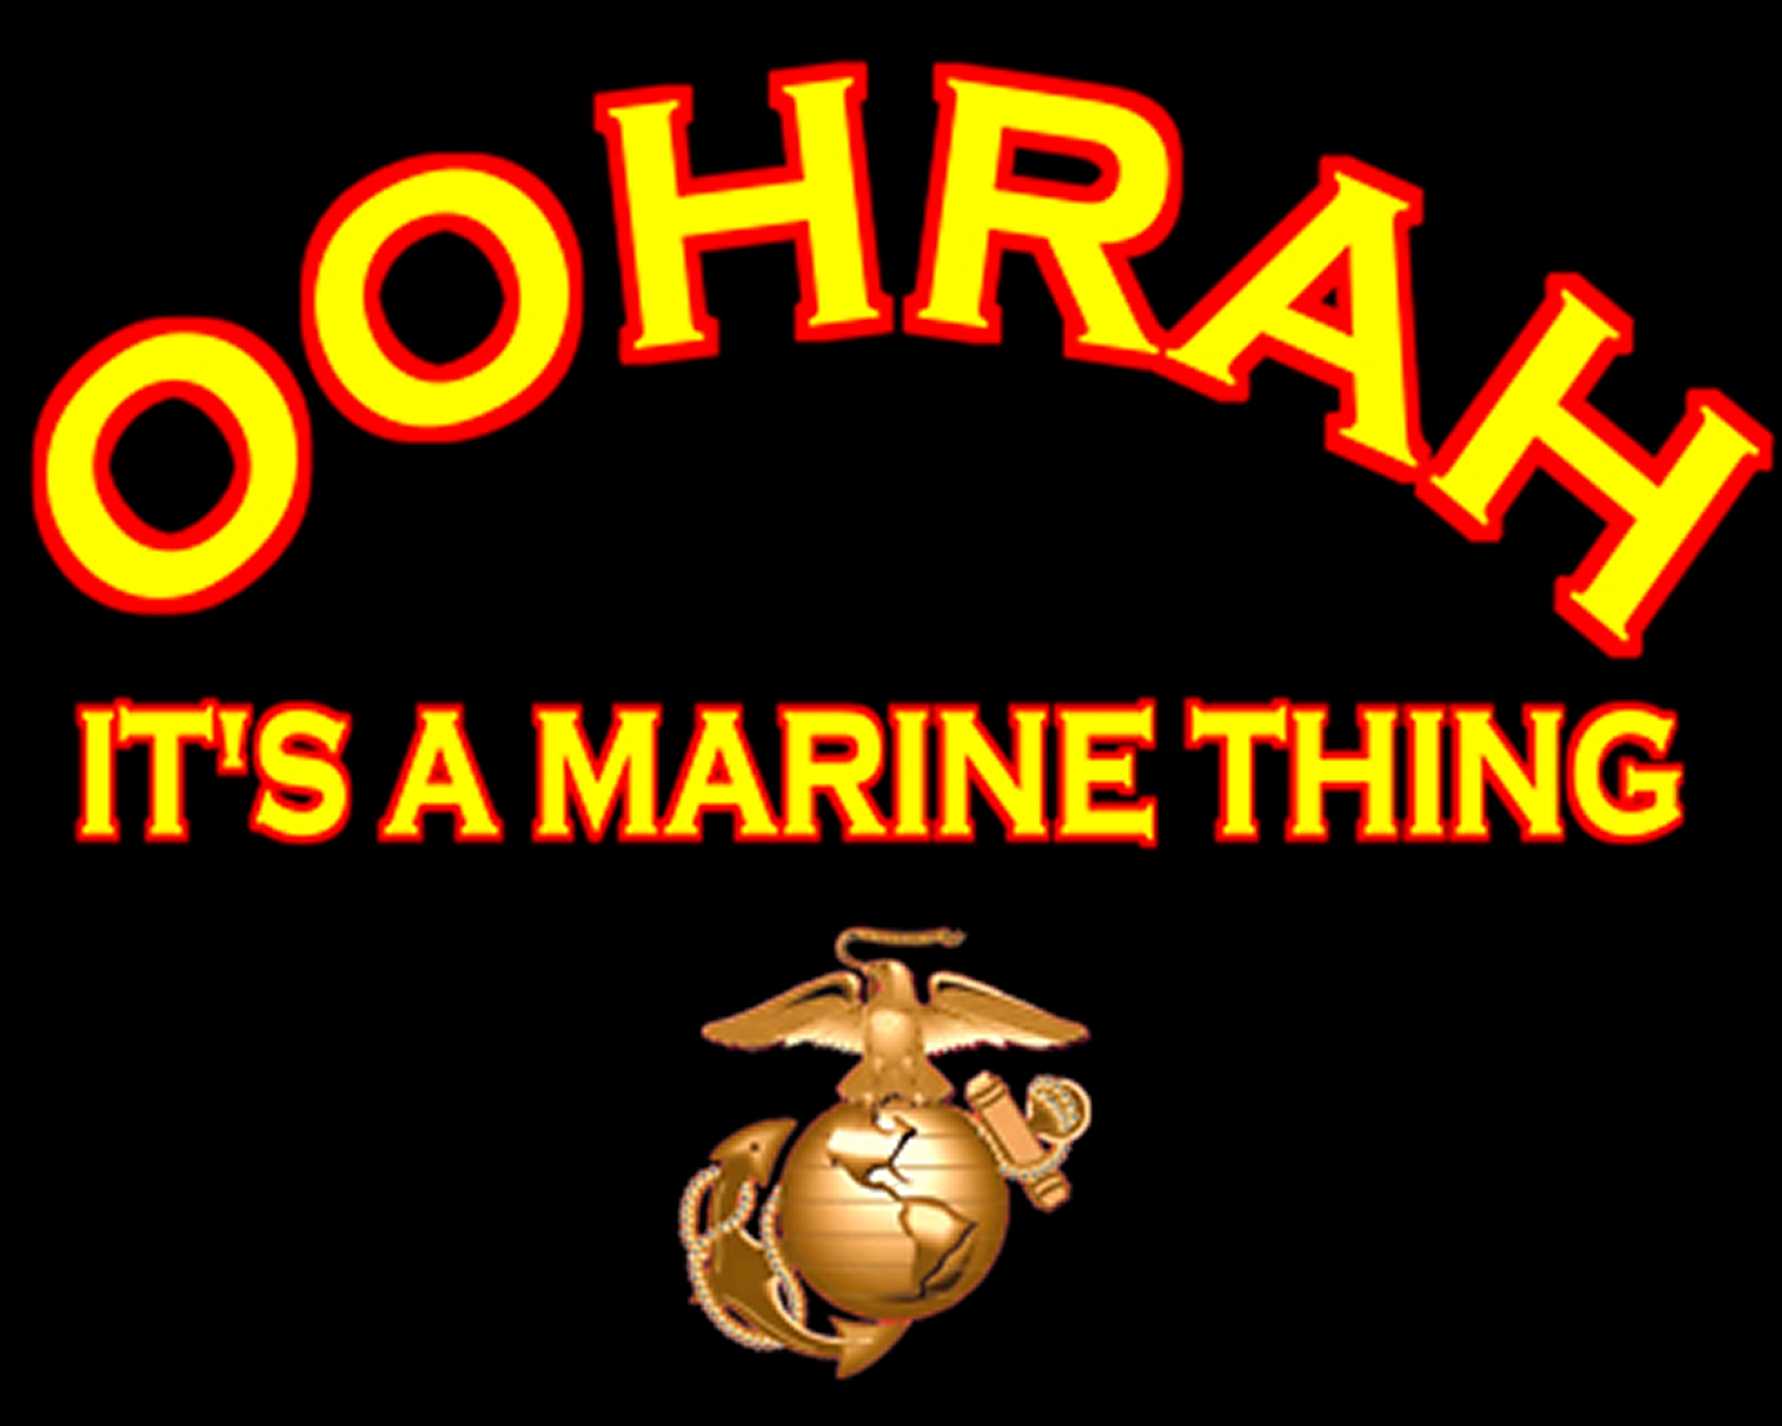 Desktop Of Us Marine Corps Wallpaper Oohrah Recon Marines Usmc